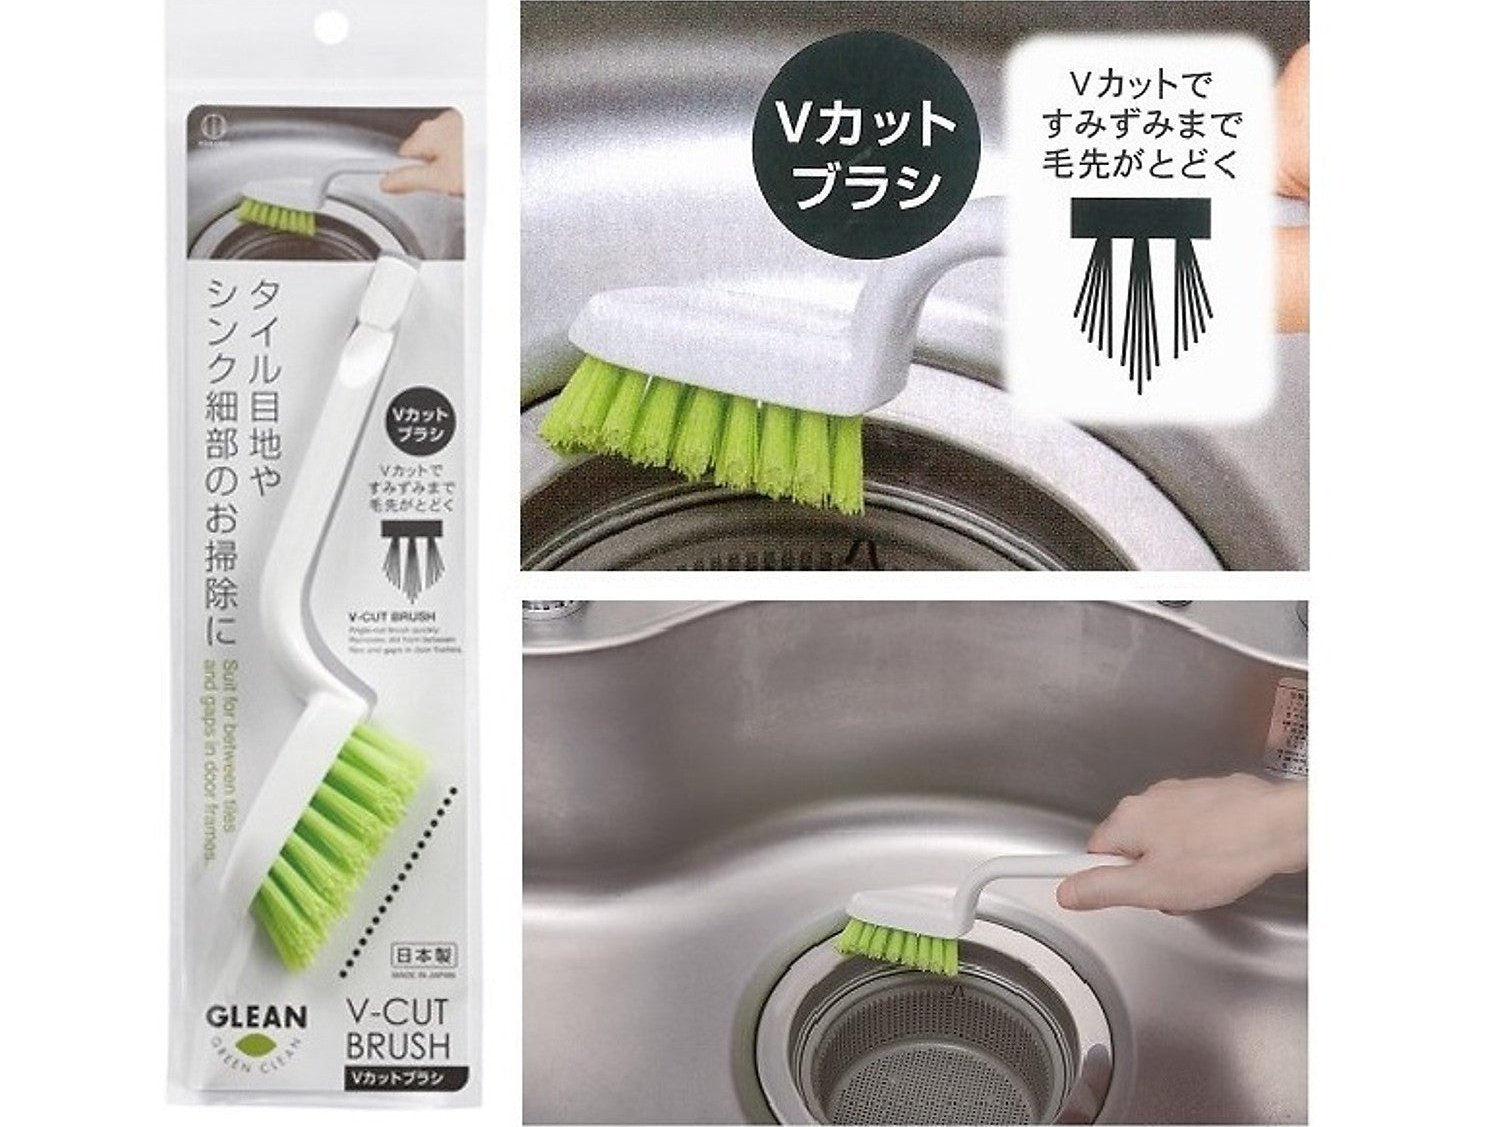 Kokubo V-Cut Brush